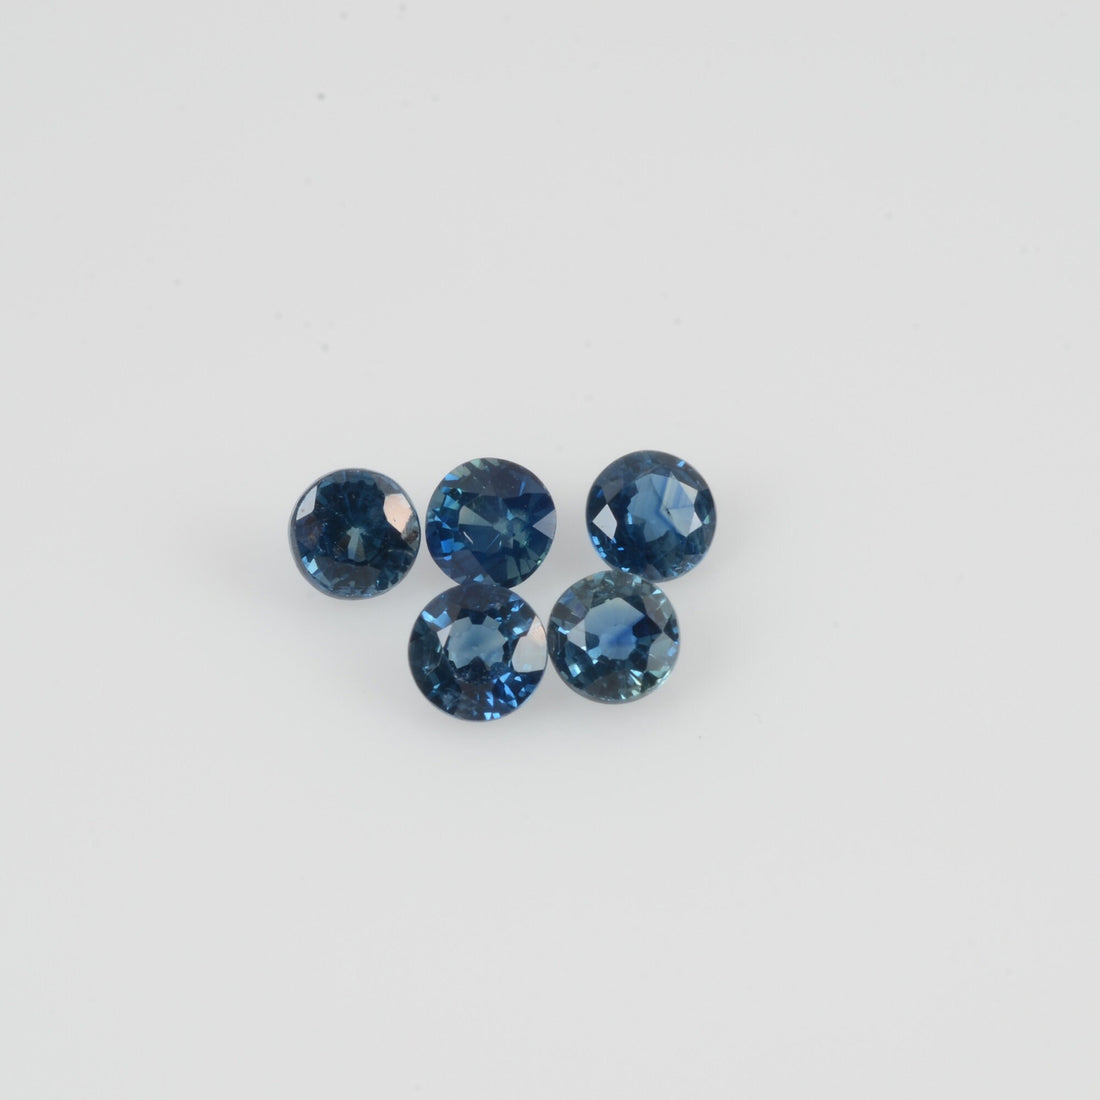 3.2-3.8 mm Natural Blue Sapphire Loose Gemstone Round Cut